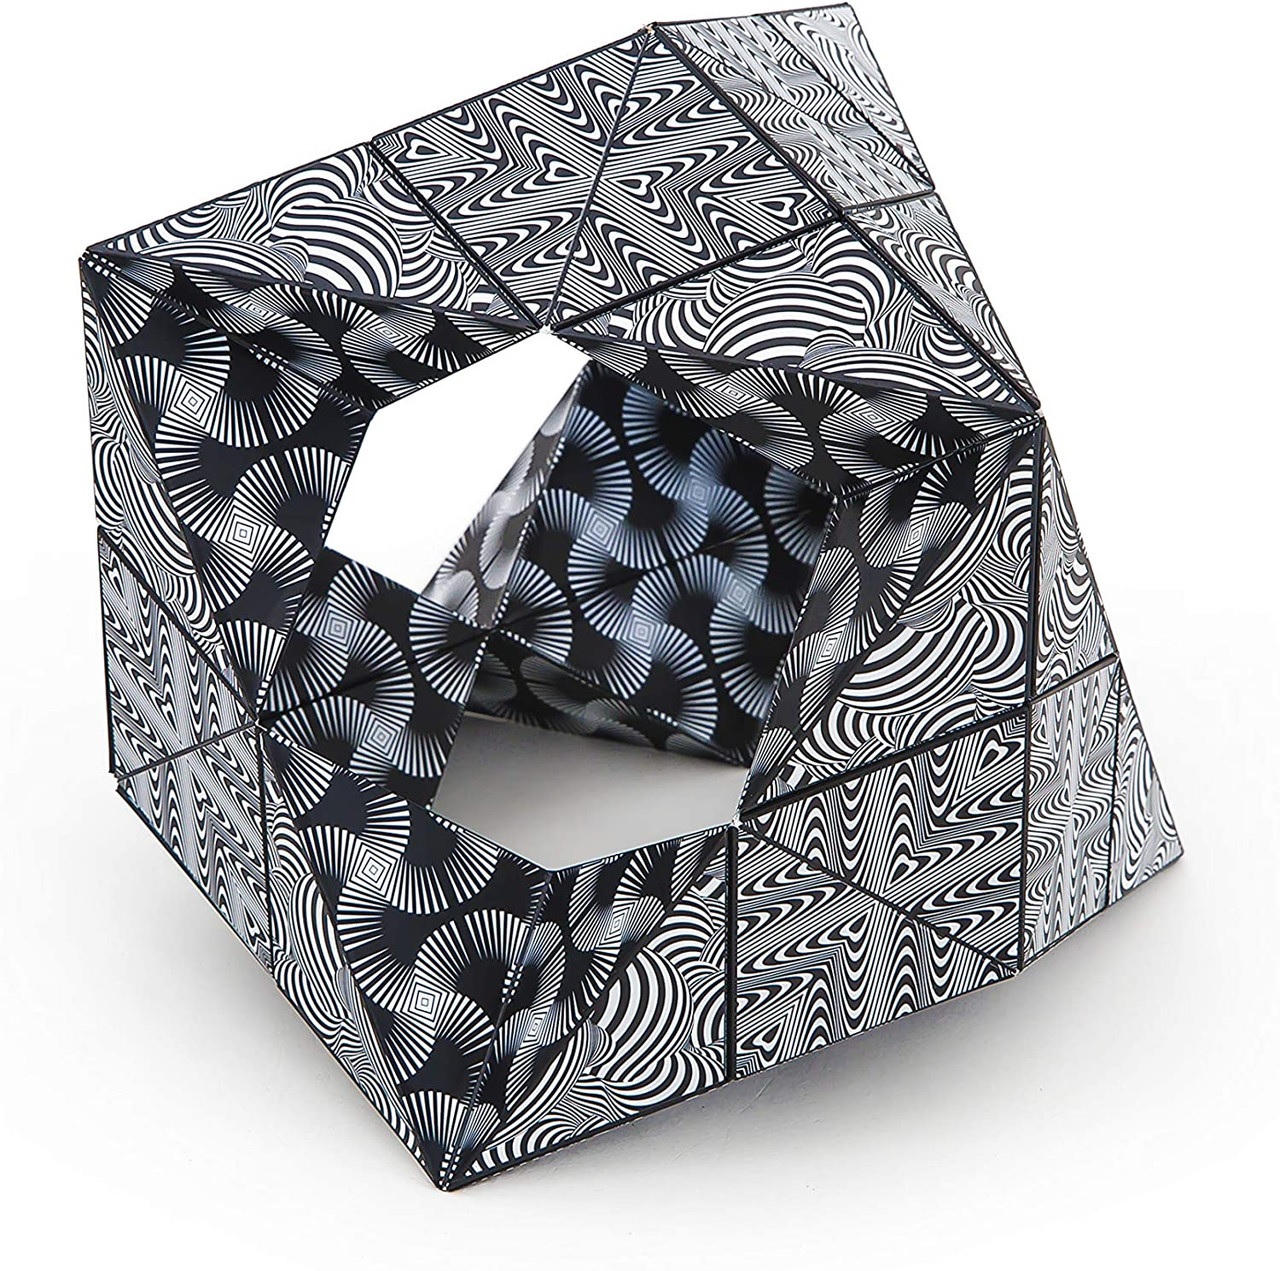 Shashibo® Cube - Geometrischer Magnetwürfel